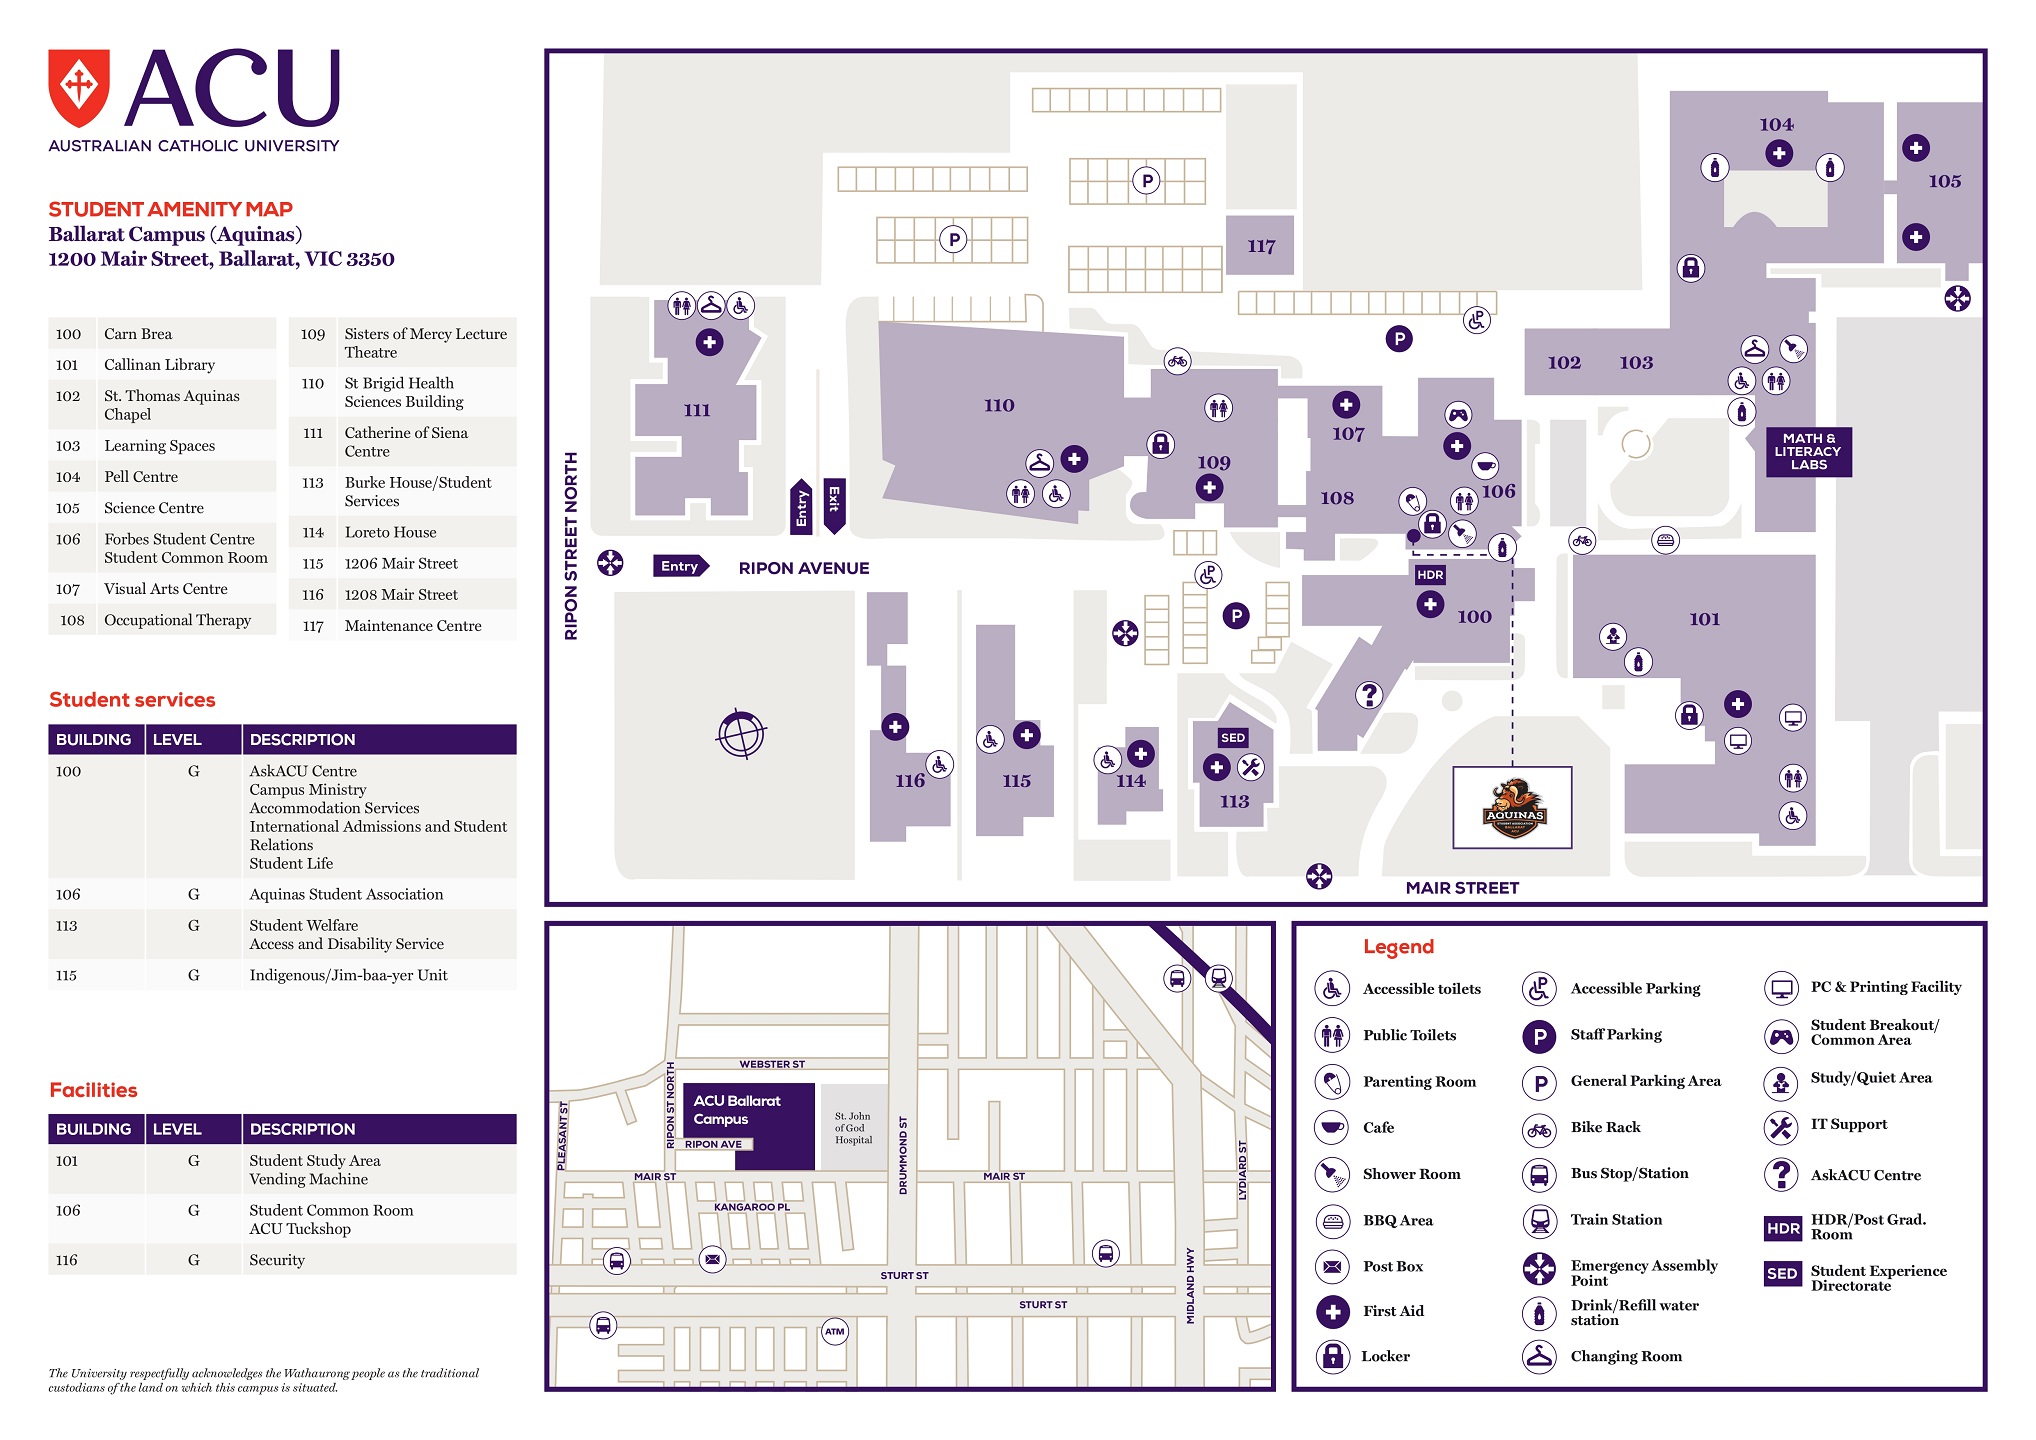 Ballarat campus amenity map